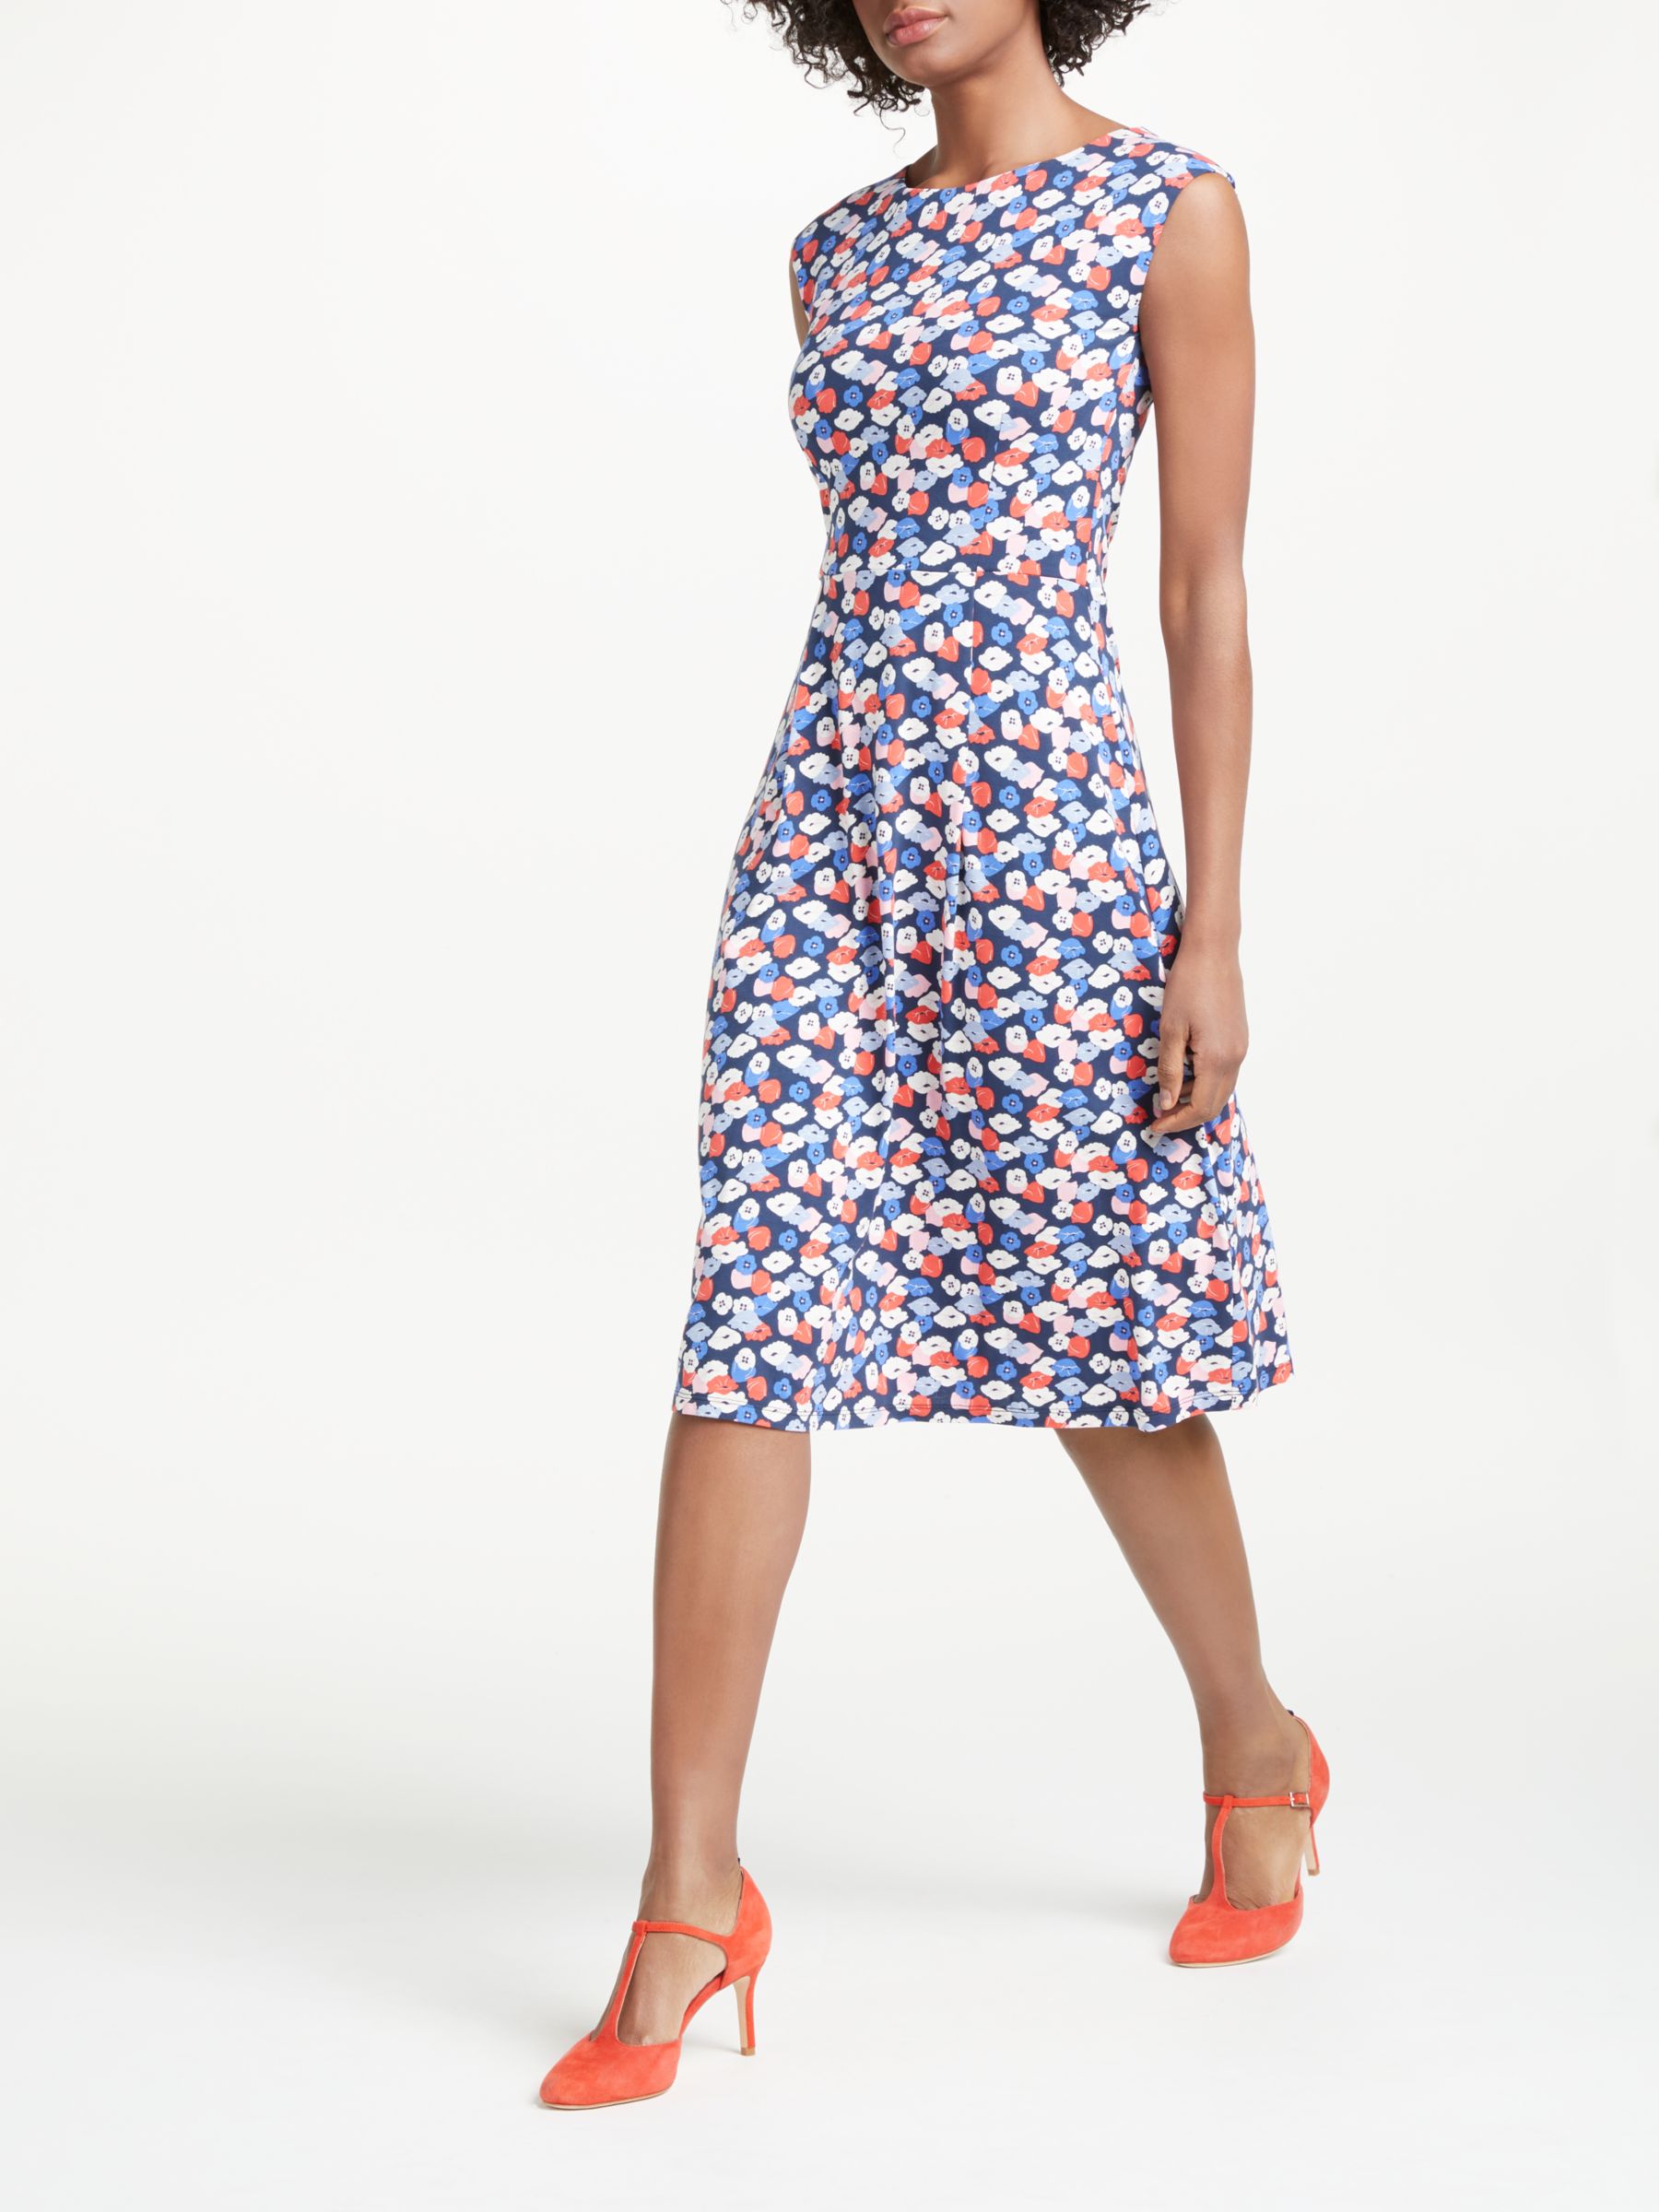 Boden Marina Poppy Print Jersey Dress 